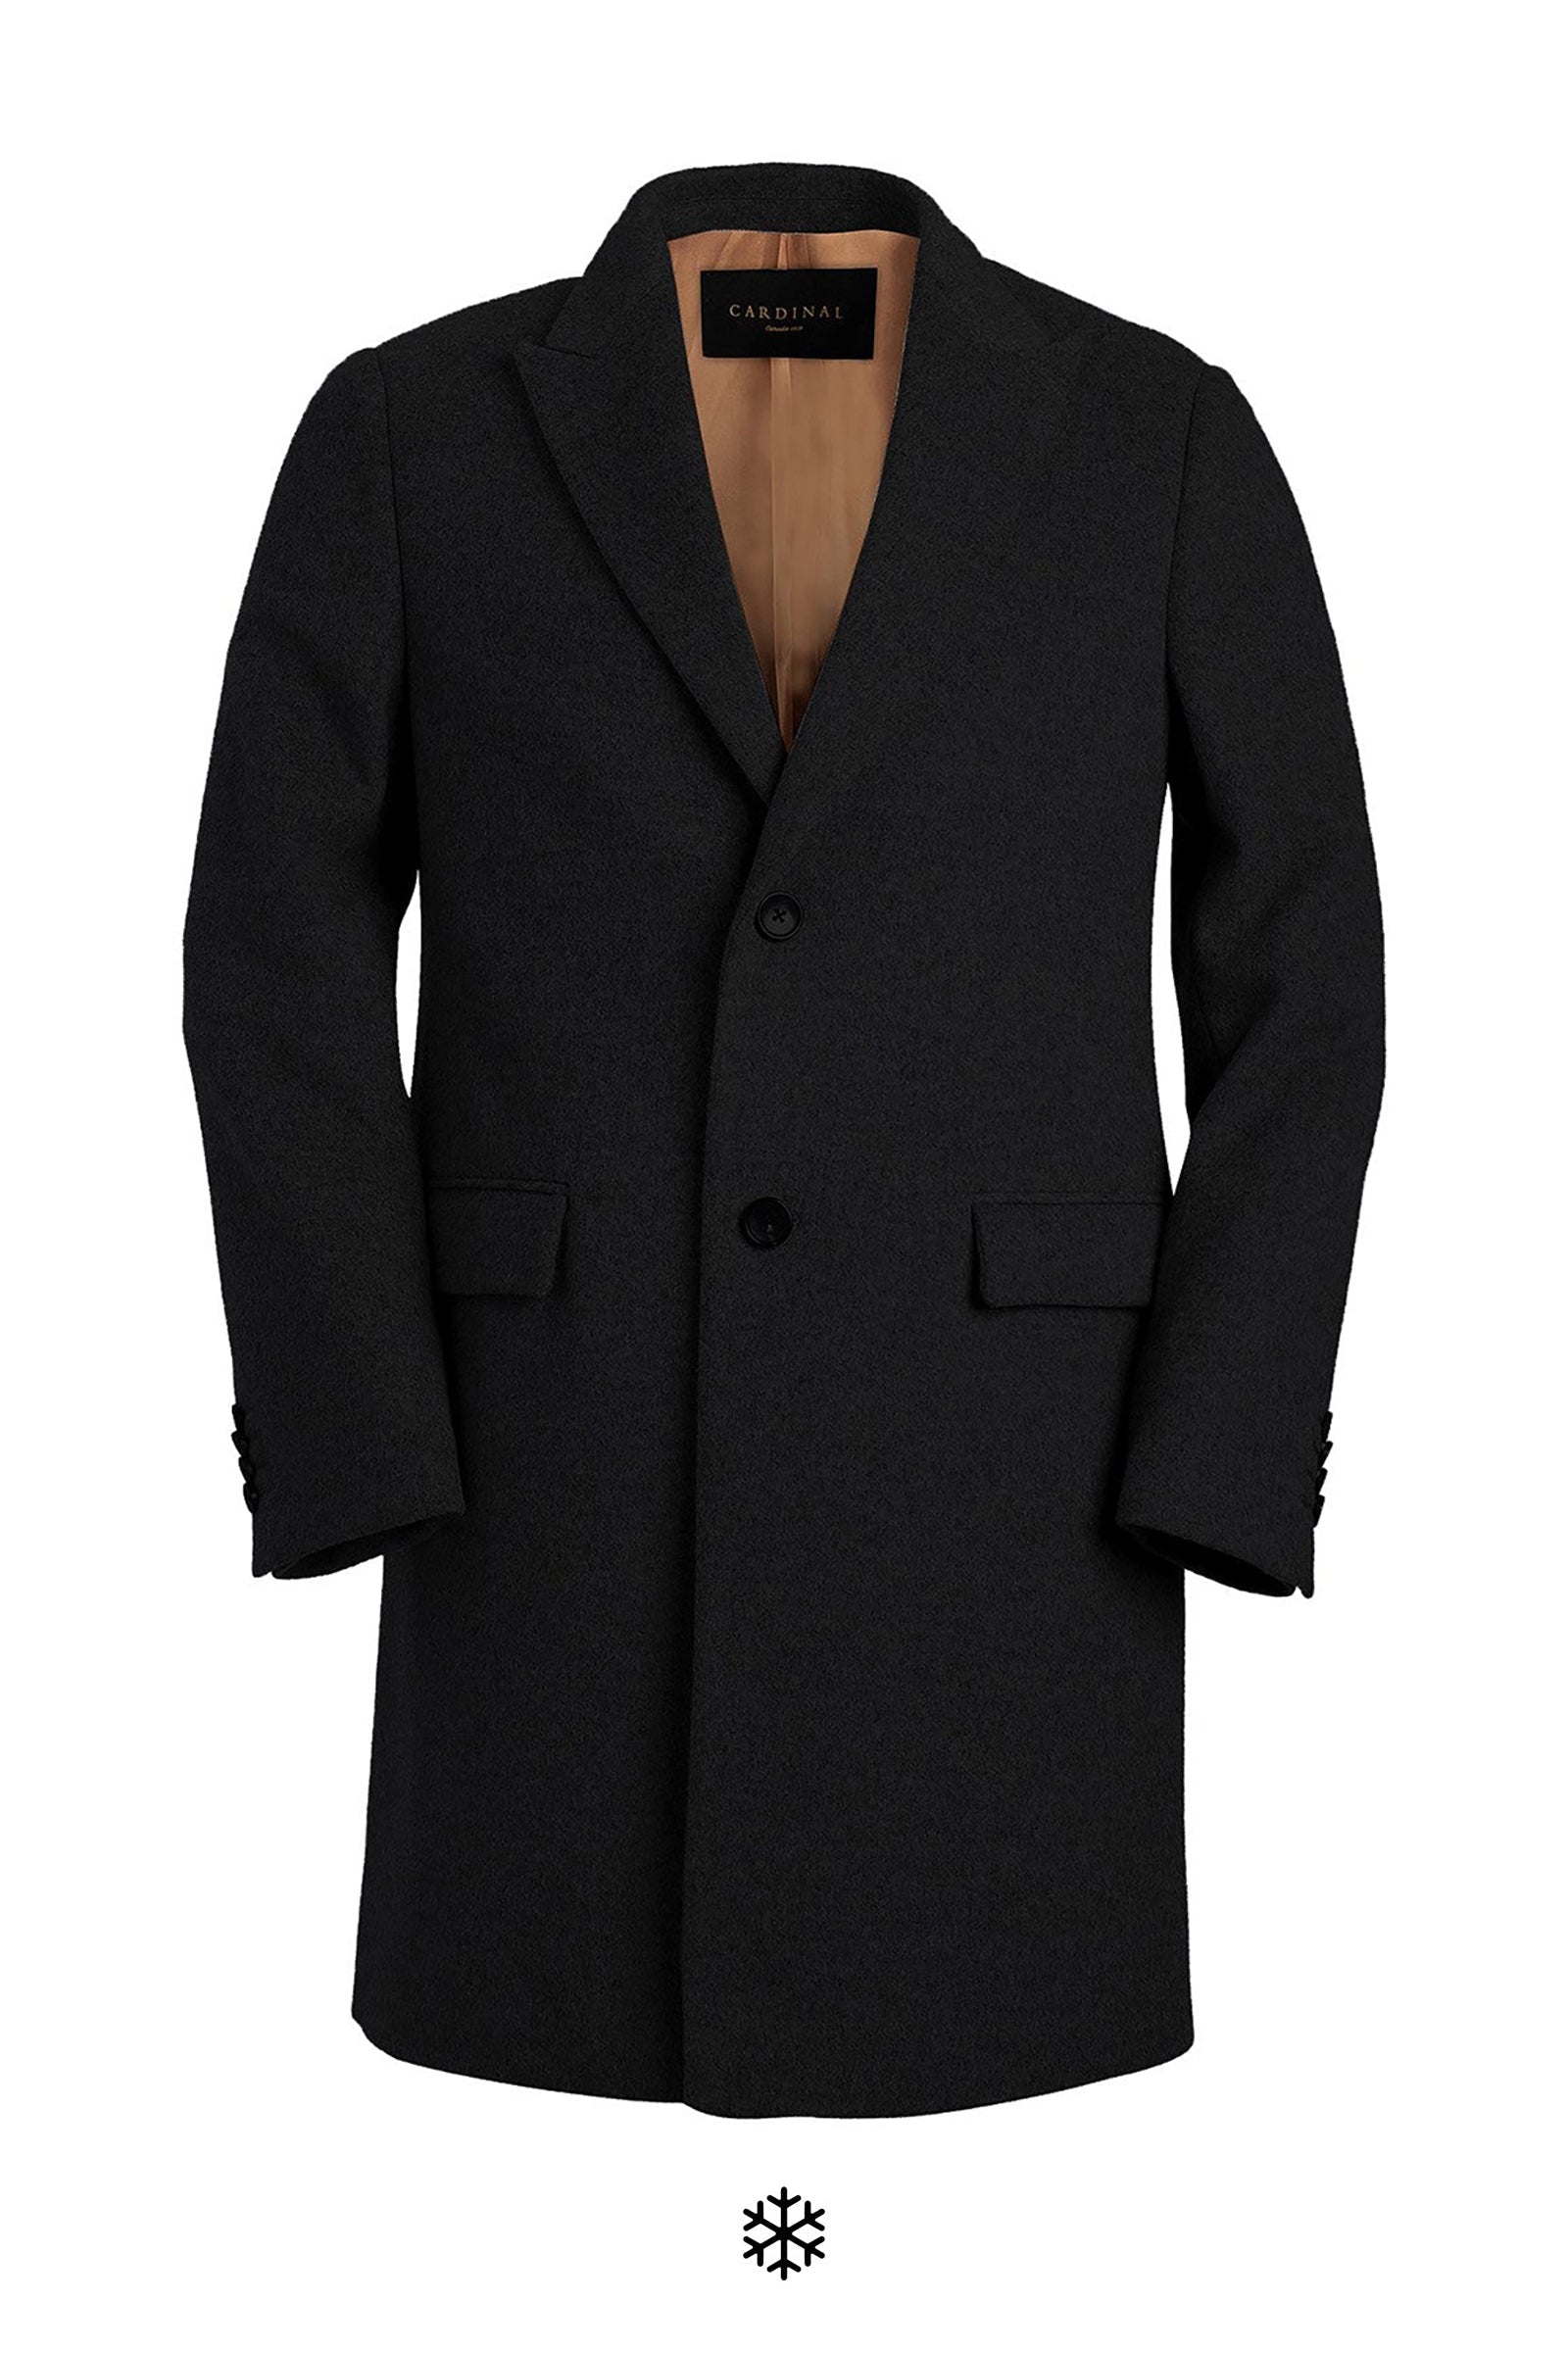 SUTTON BLACK WOOL OVERCOAT - Dress - Cardinal of Canada-CA - BLACK WOOL SUTTON topcoat 38 inch length